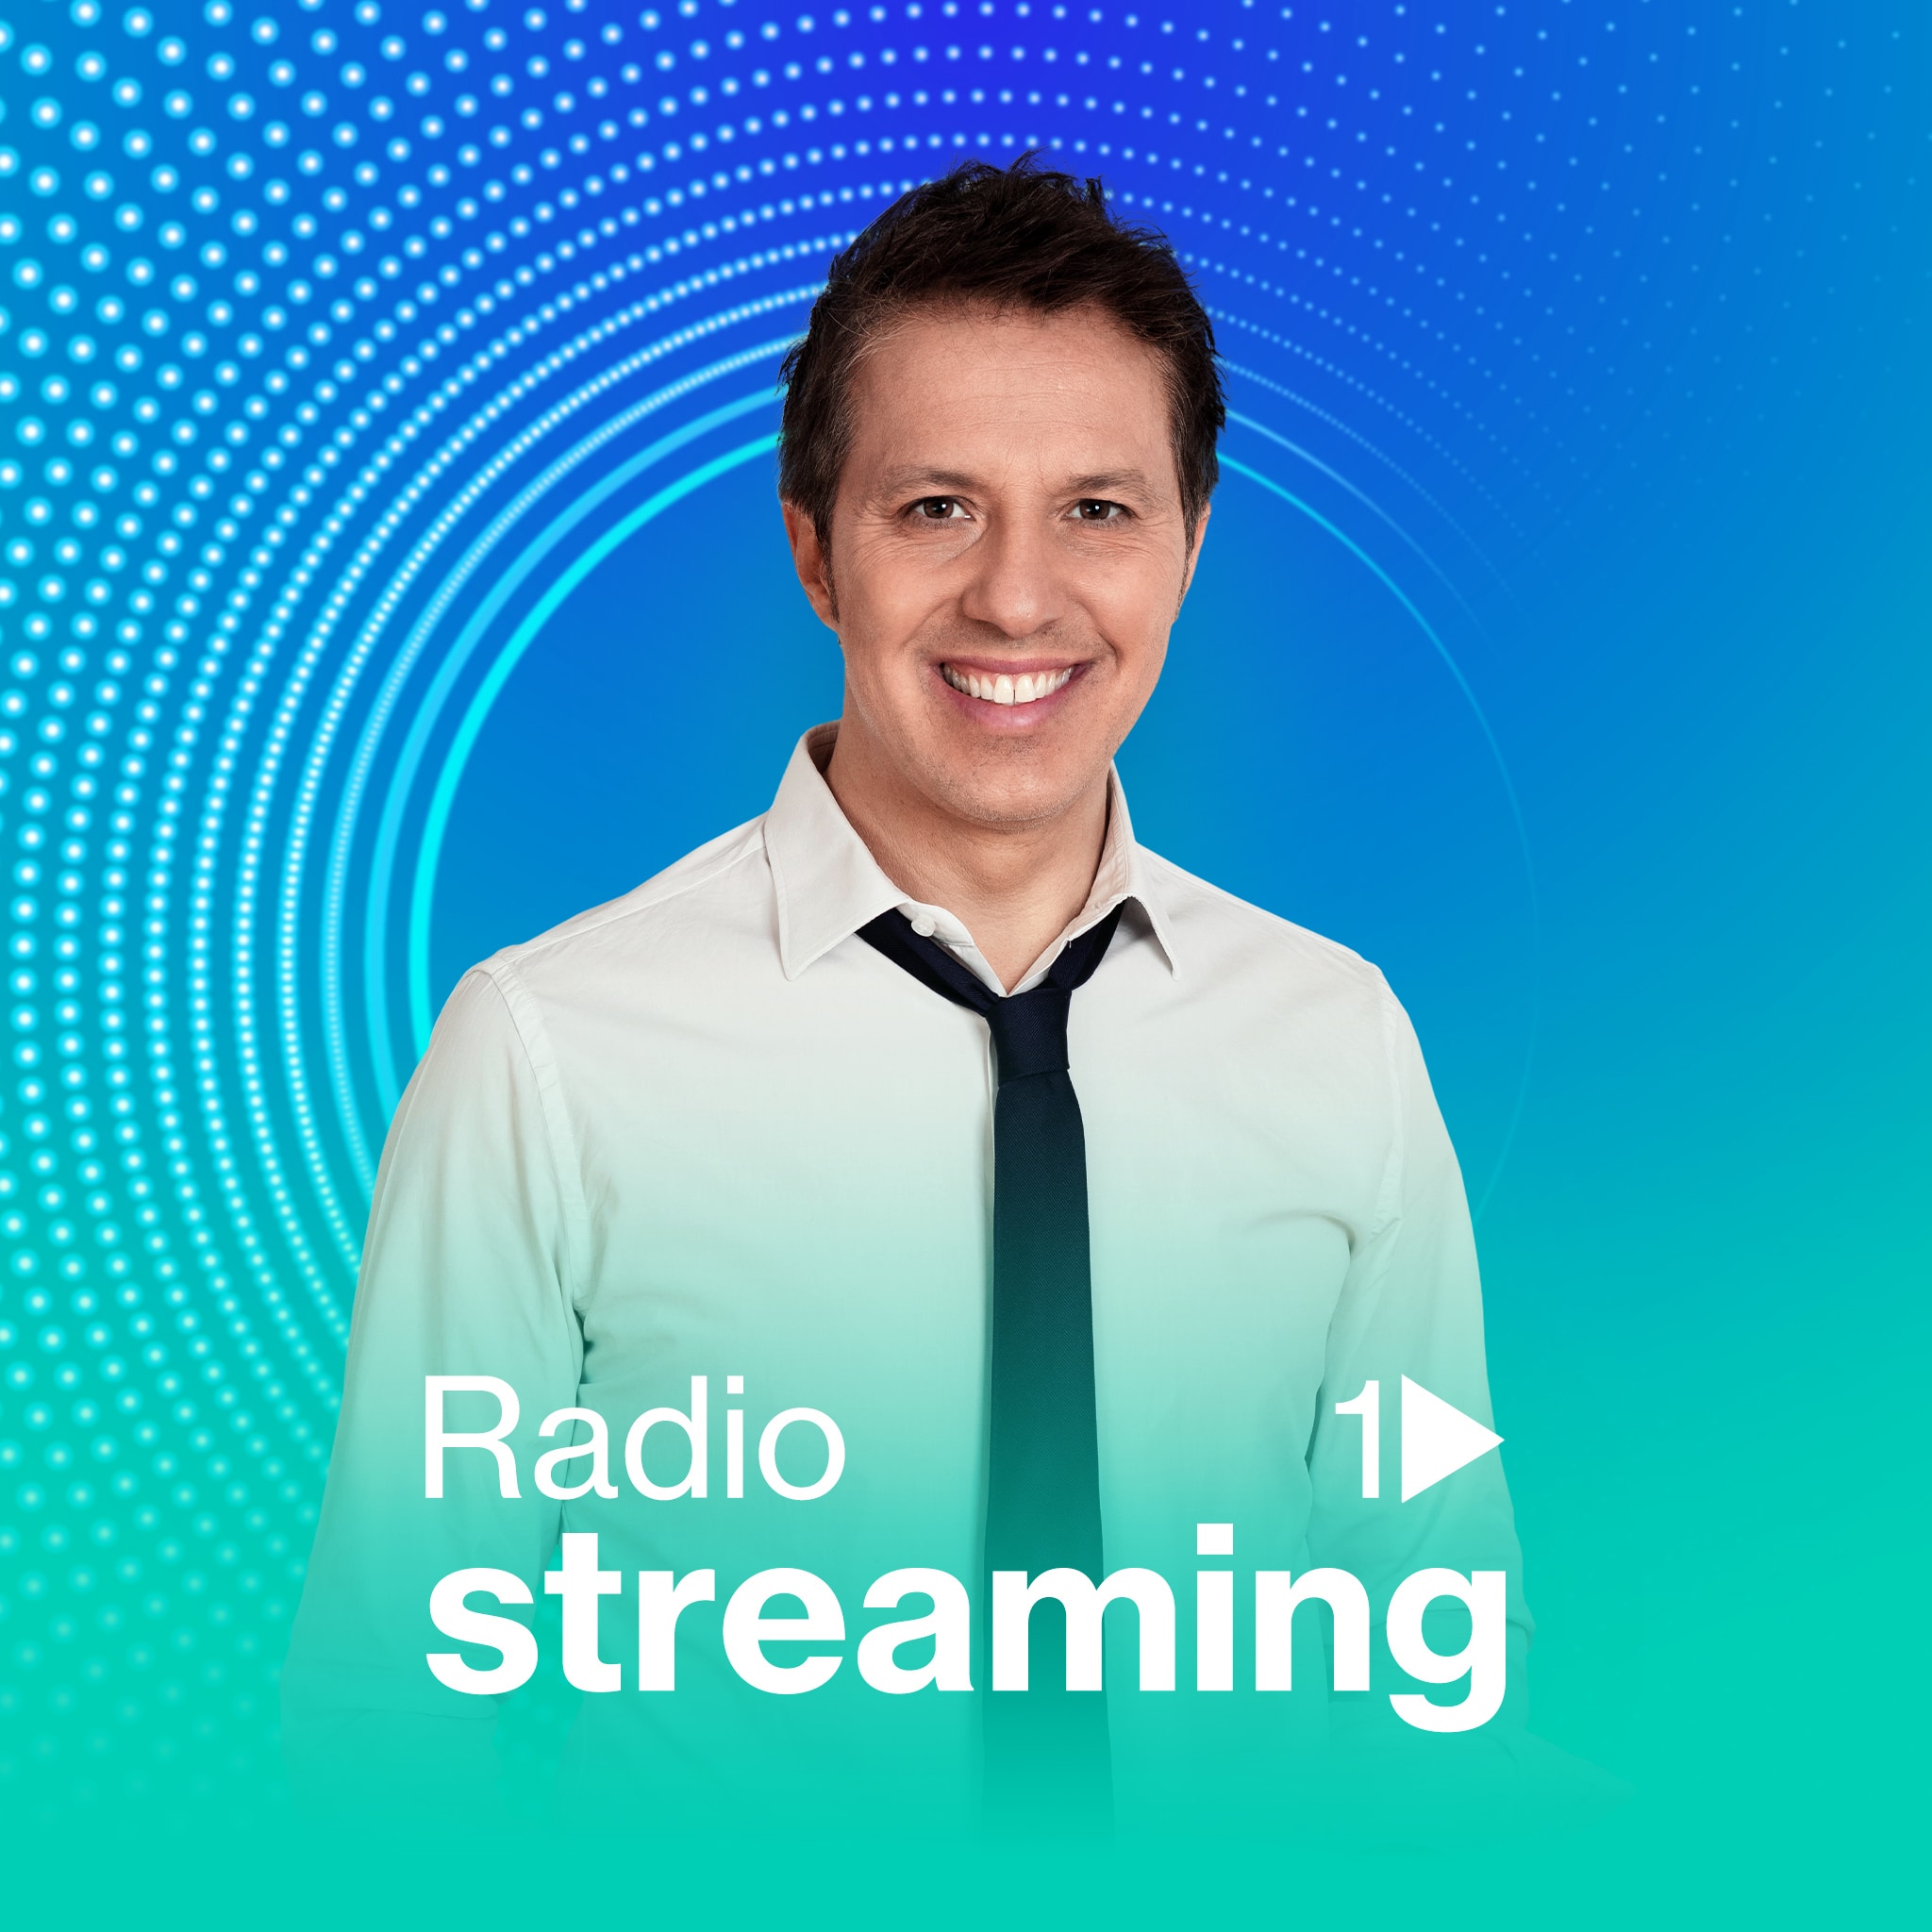 Rai Radio 1 Radio1 Streaming